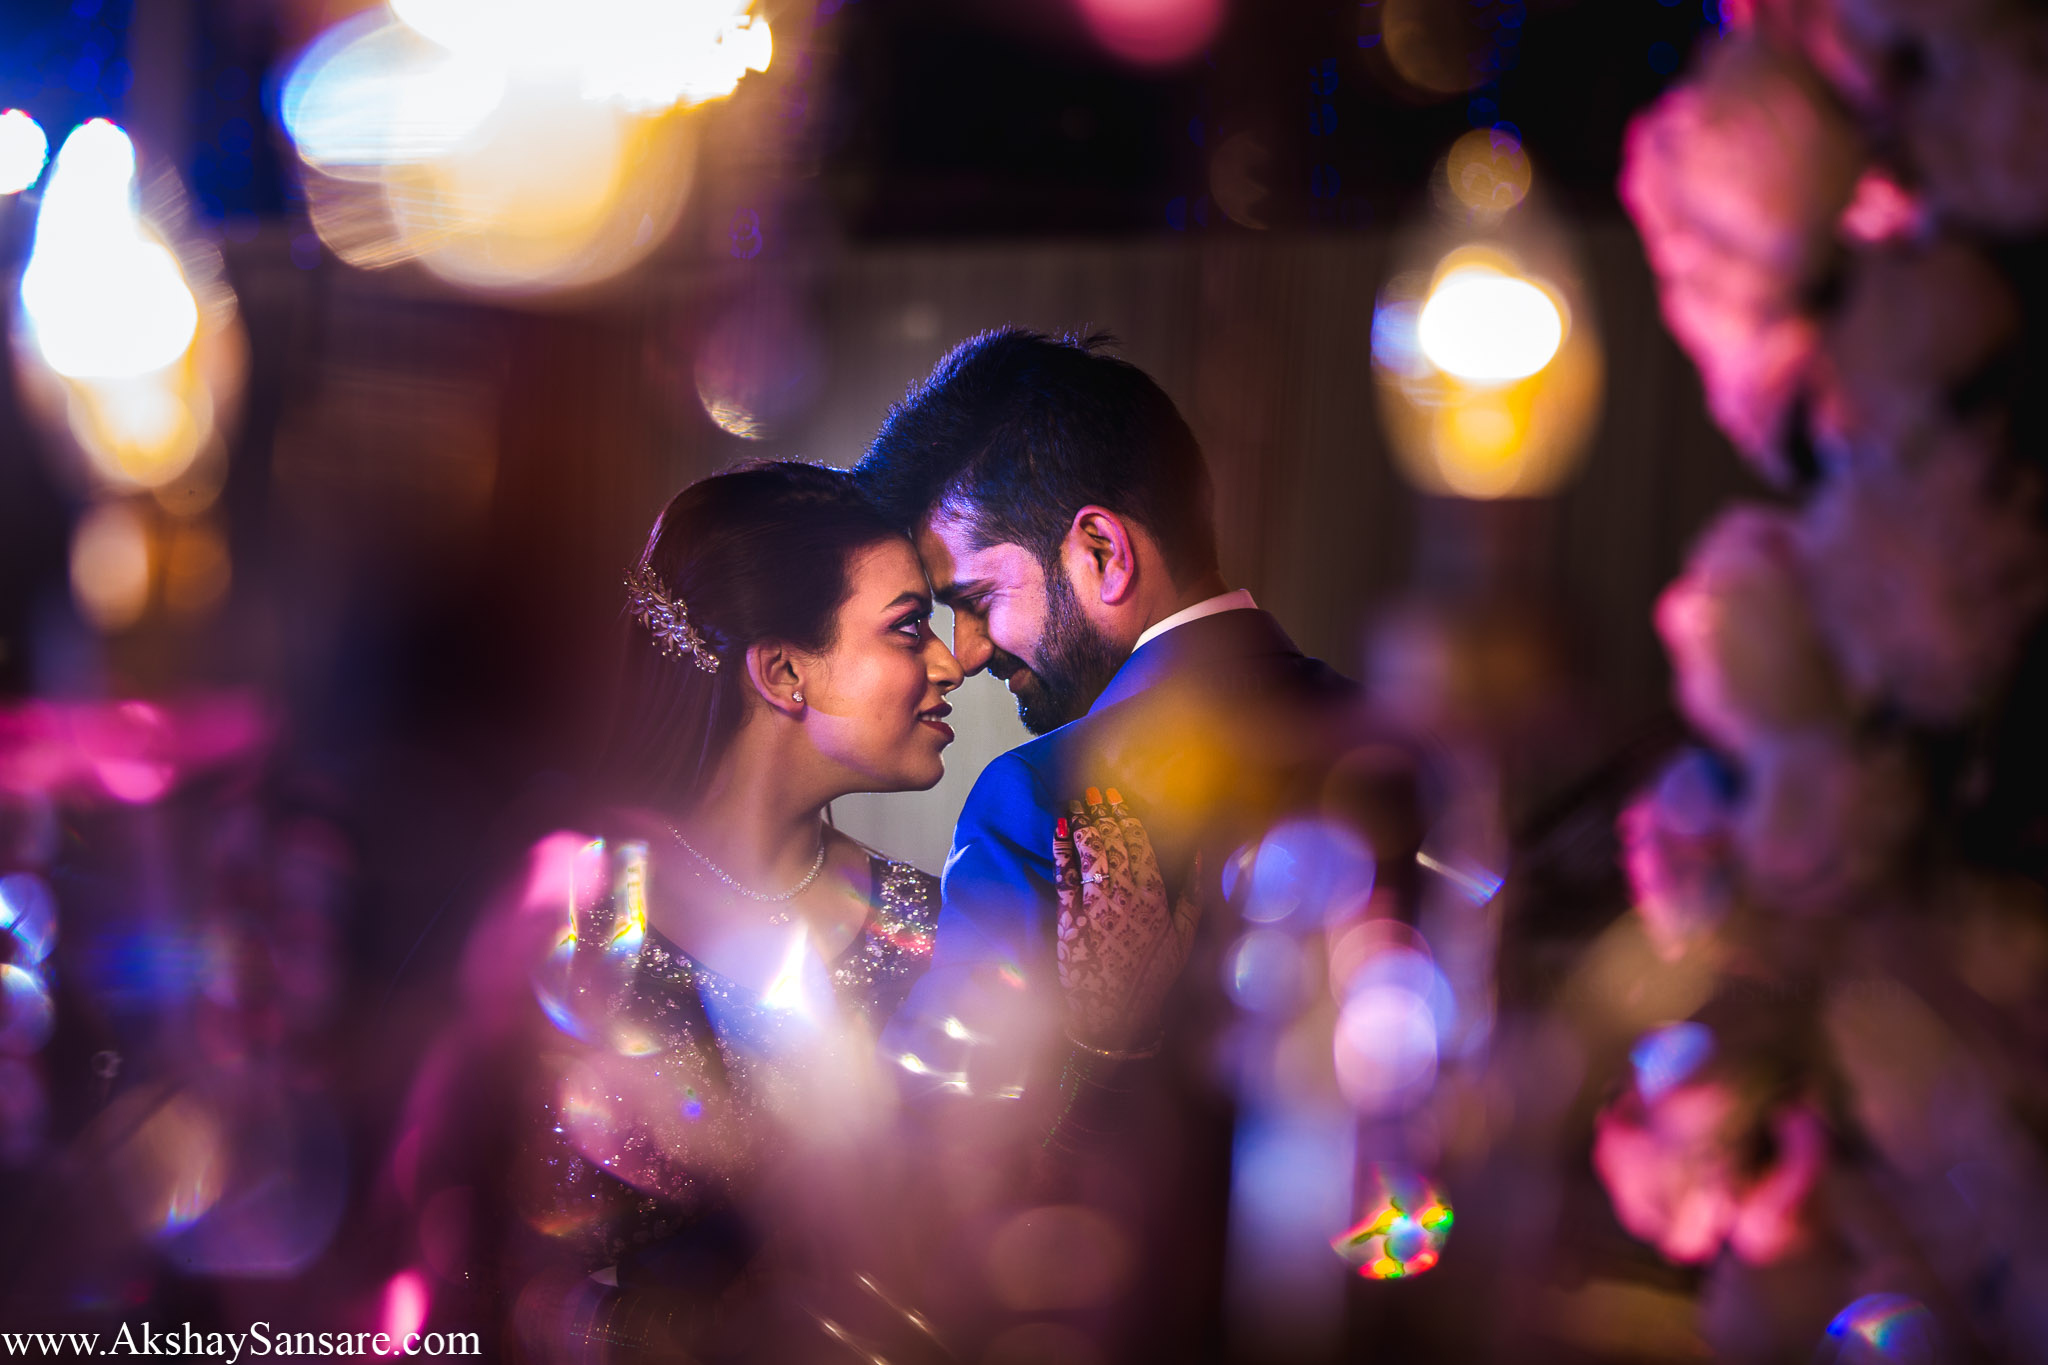 Ajay & Devika Akshay Sansare Photography Best Candid wedding photographer in mumbai india29.jpg